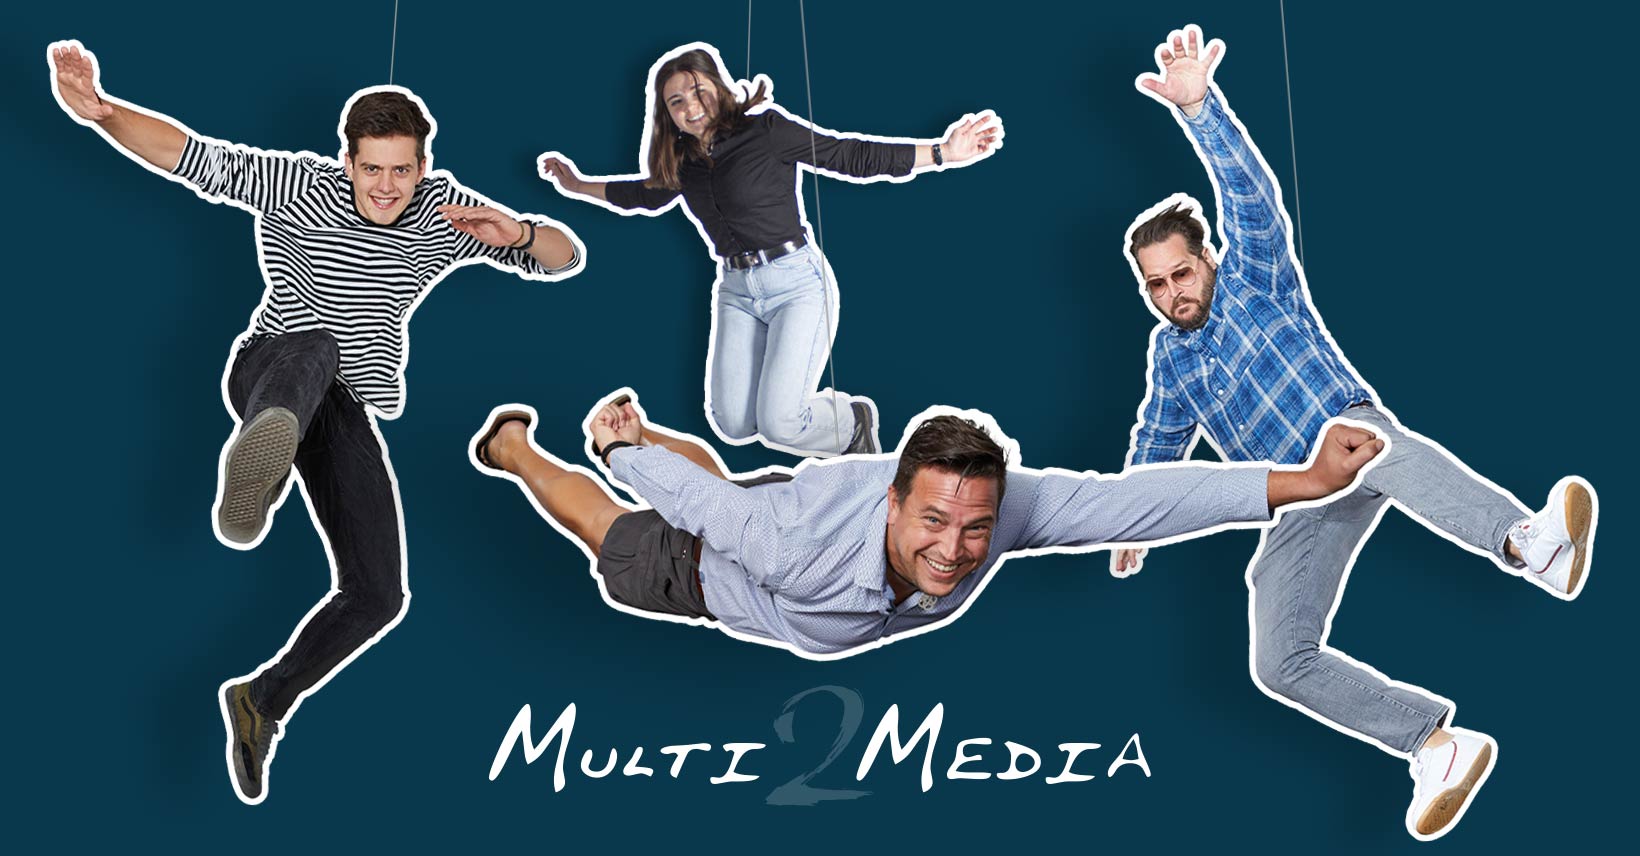 (c) Multi2media.de